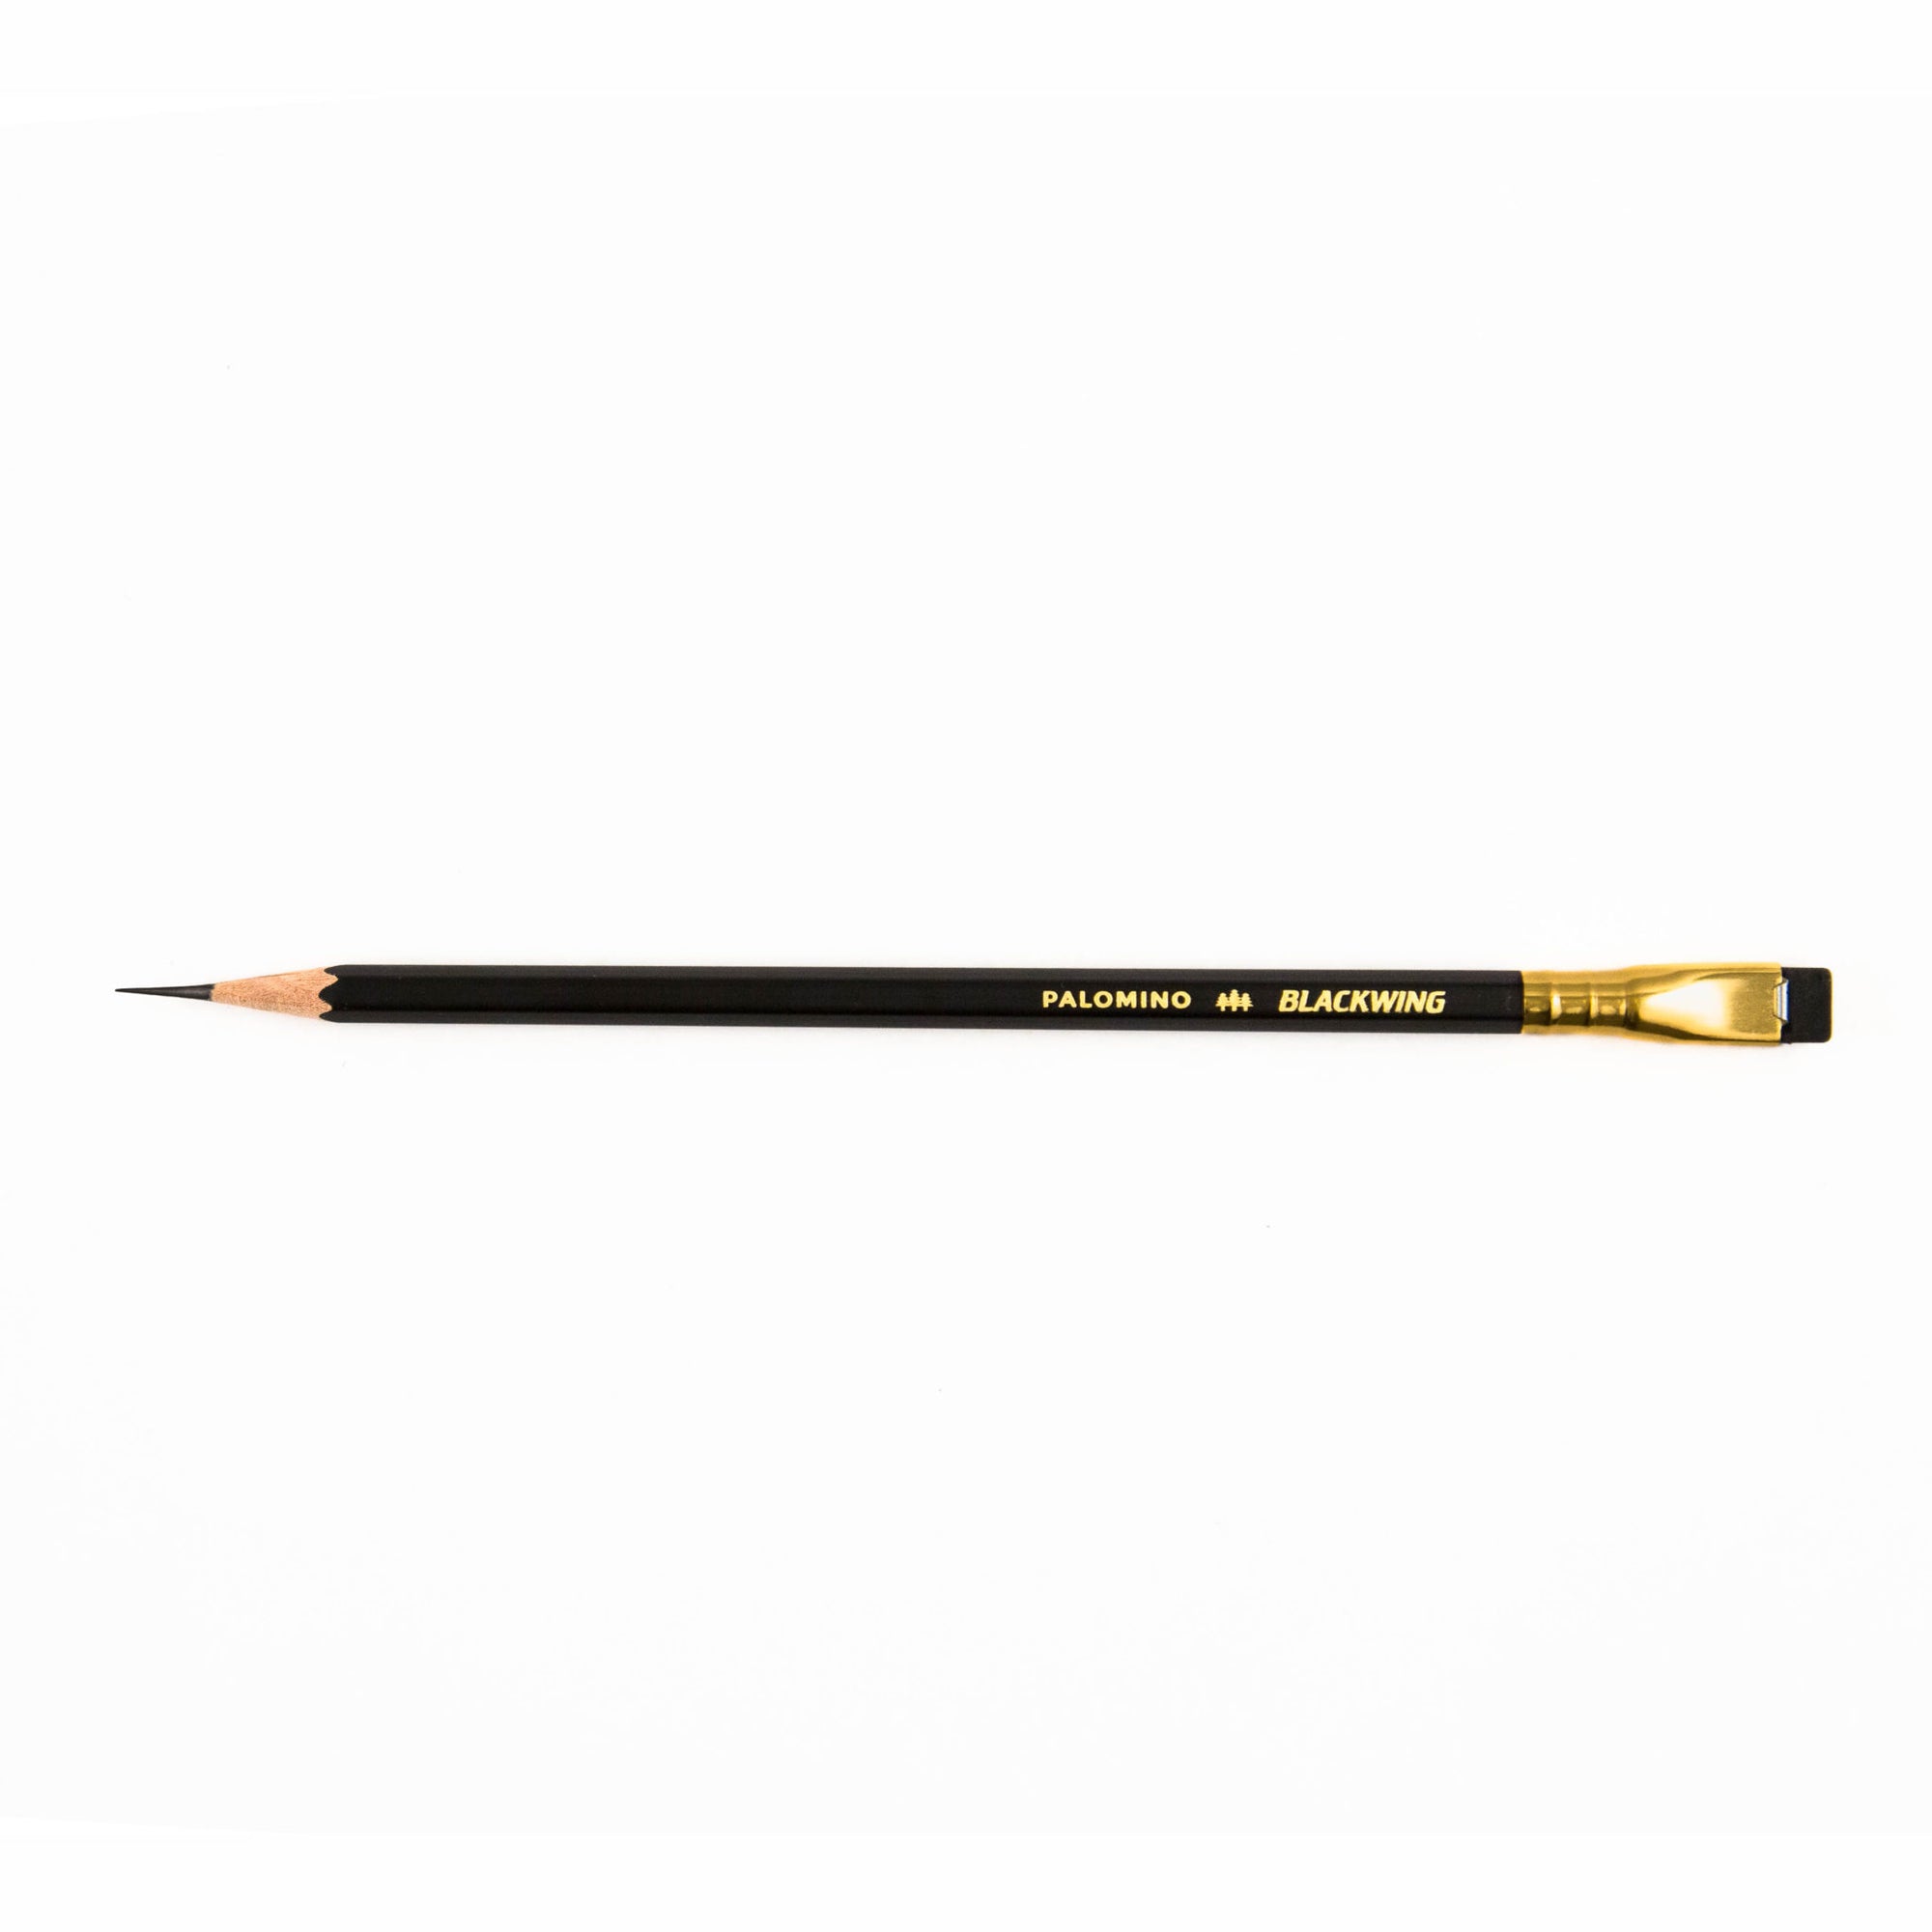 Palomino Blackwing Pencils (12 pack) - NOMADO Store 